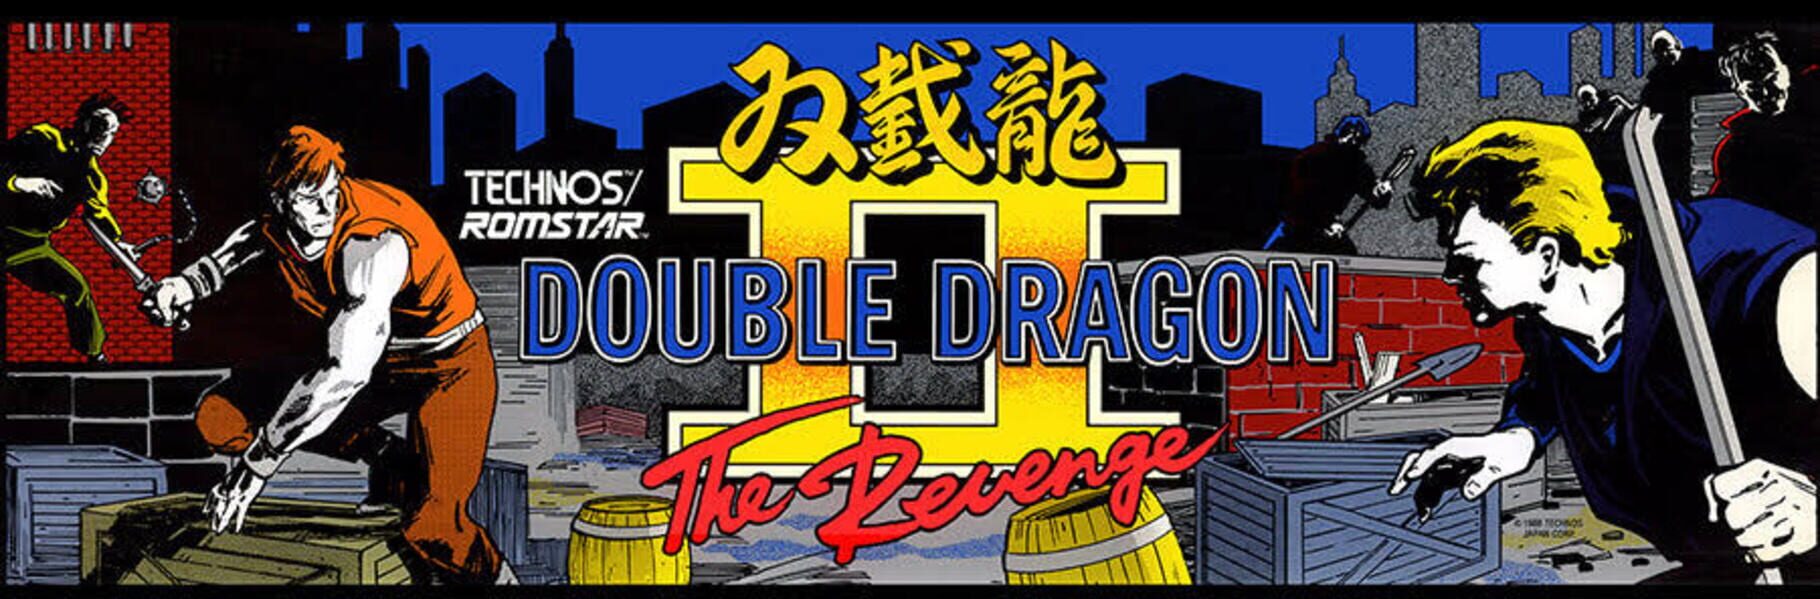 Double Dragon II: The Revenge artwork